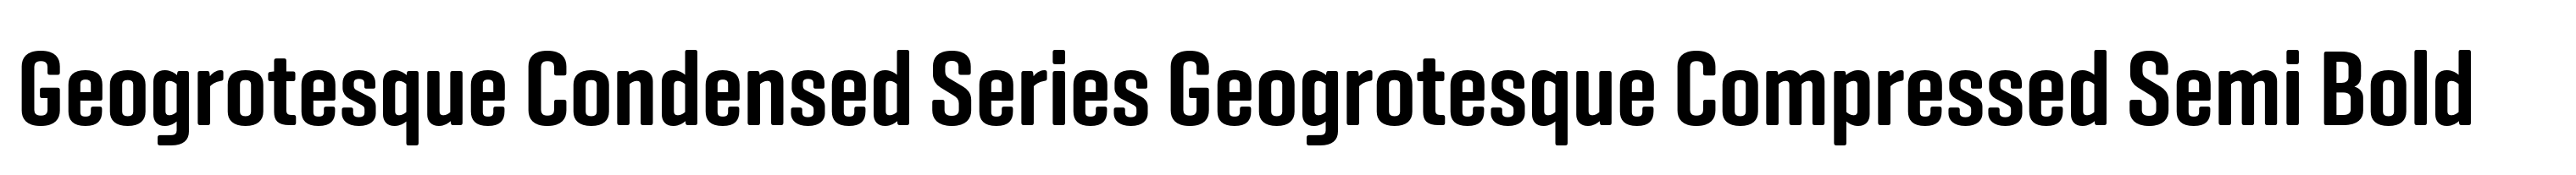 Geogrotesque Condensed Series Geogrotesque Compressed Semi Bold